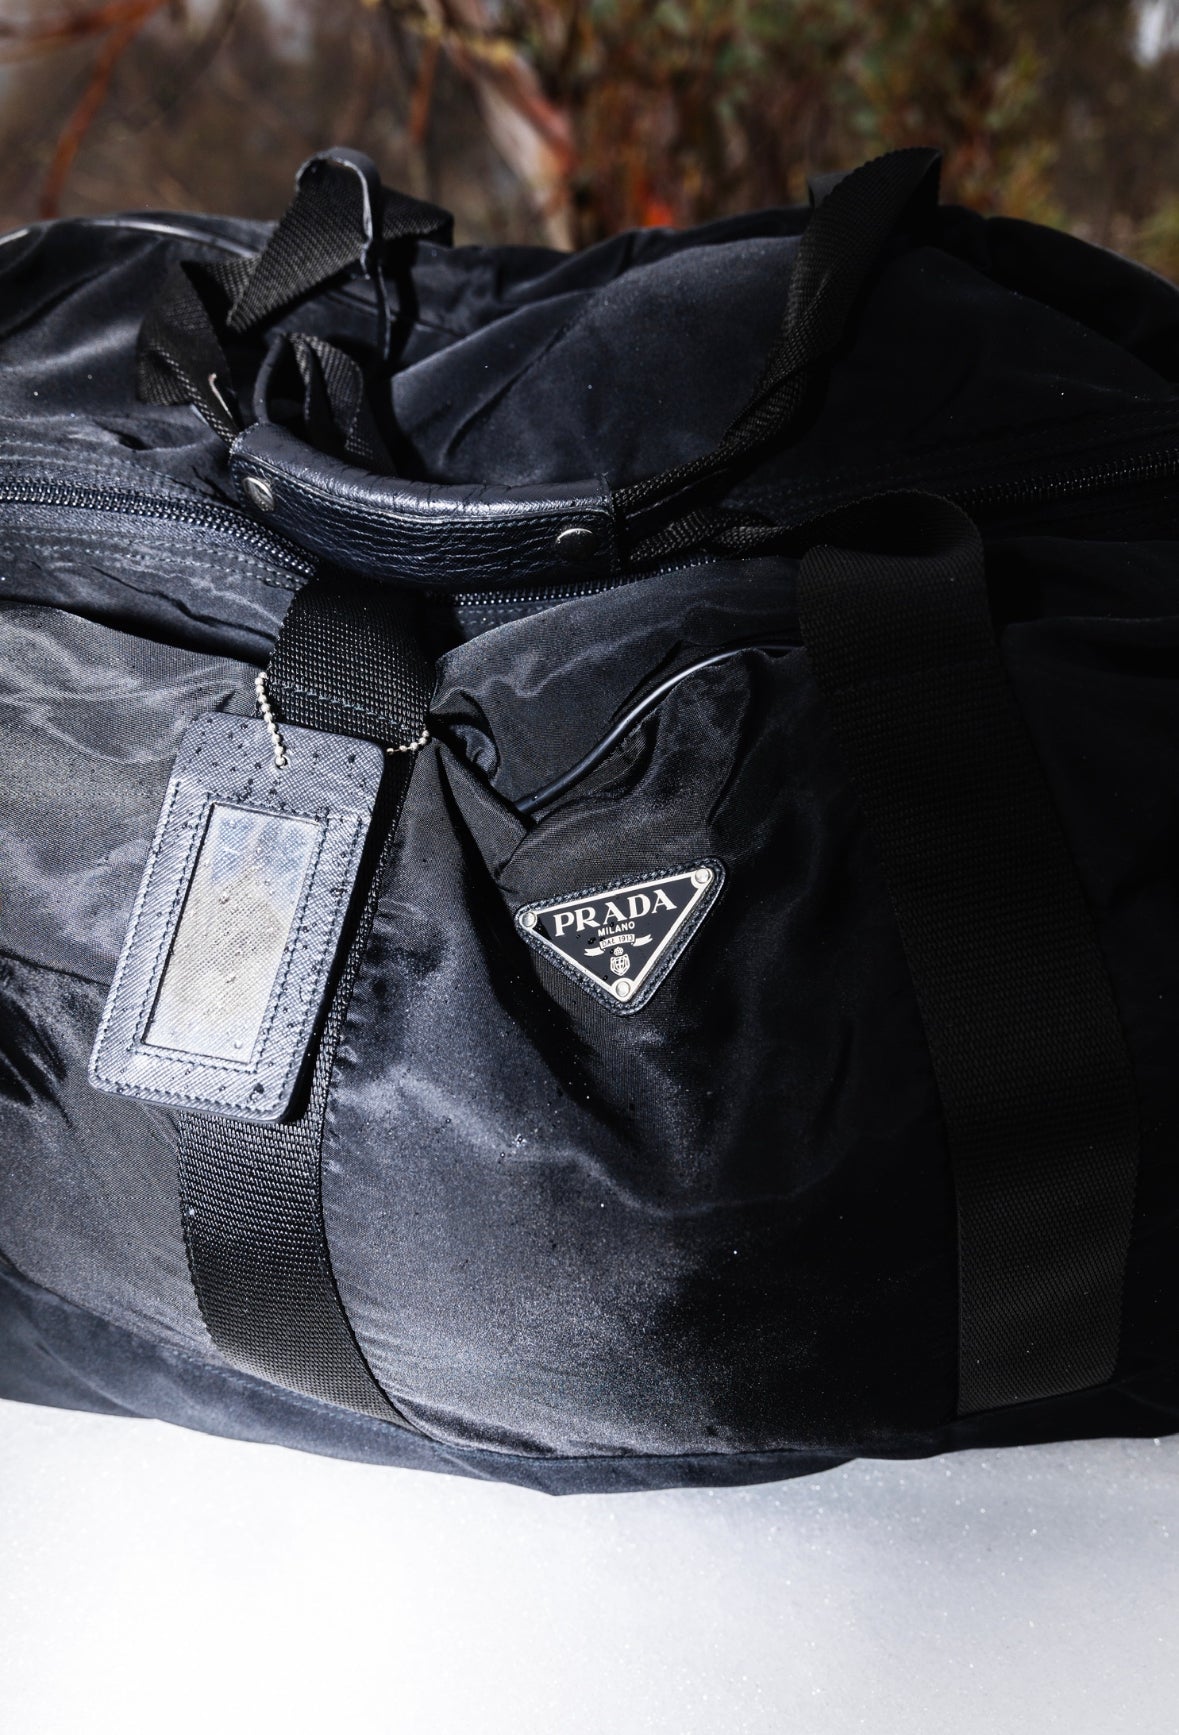 Prada Black Duffle Nylon Bag